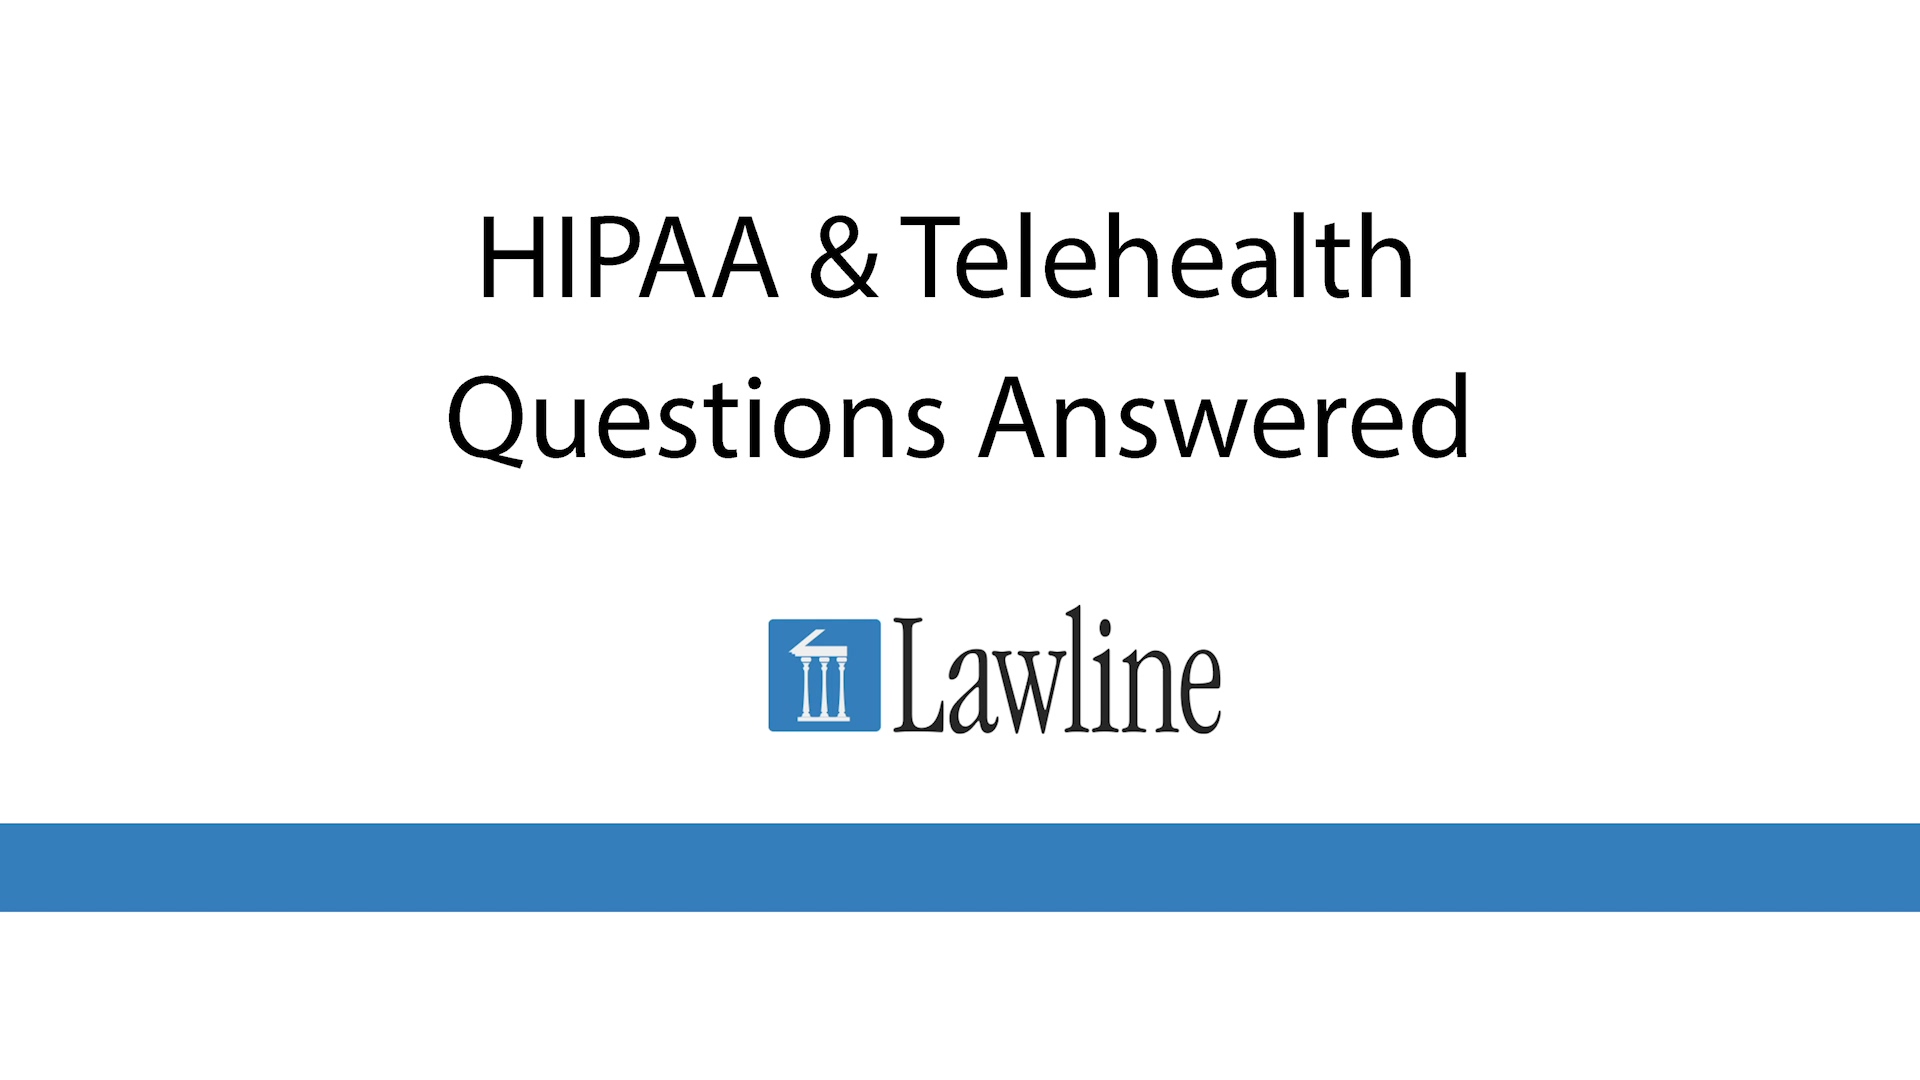 HIPAA & Telehealth Questions Answered EDITED